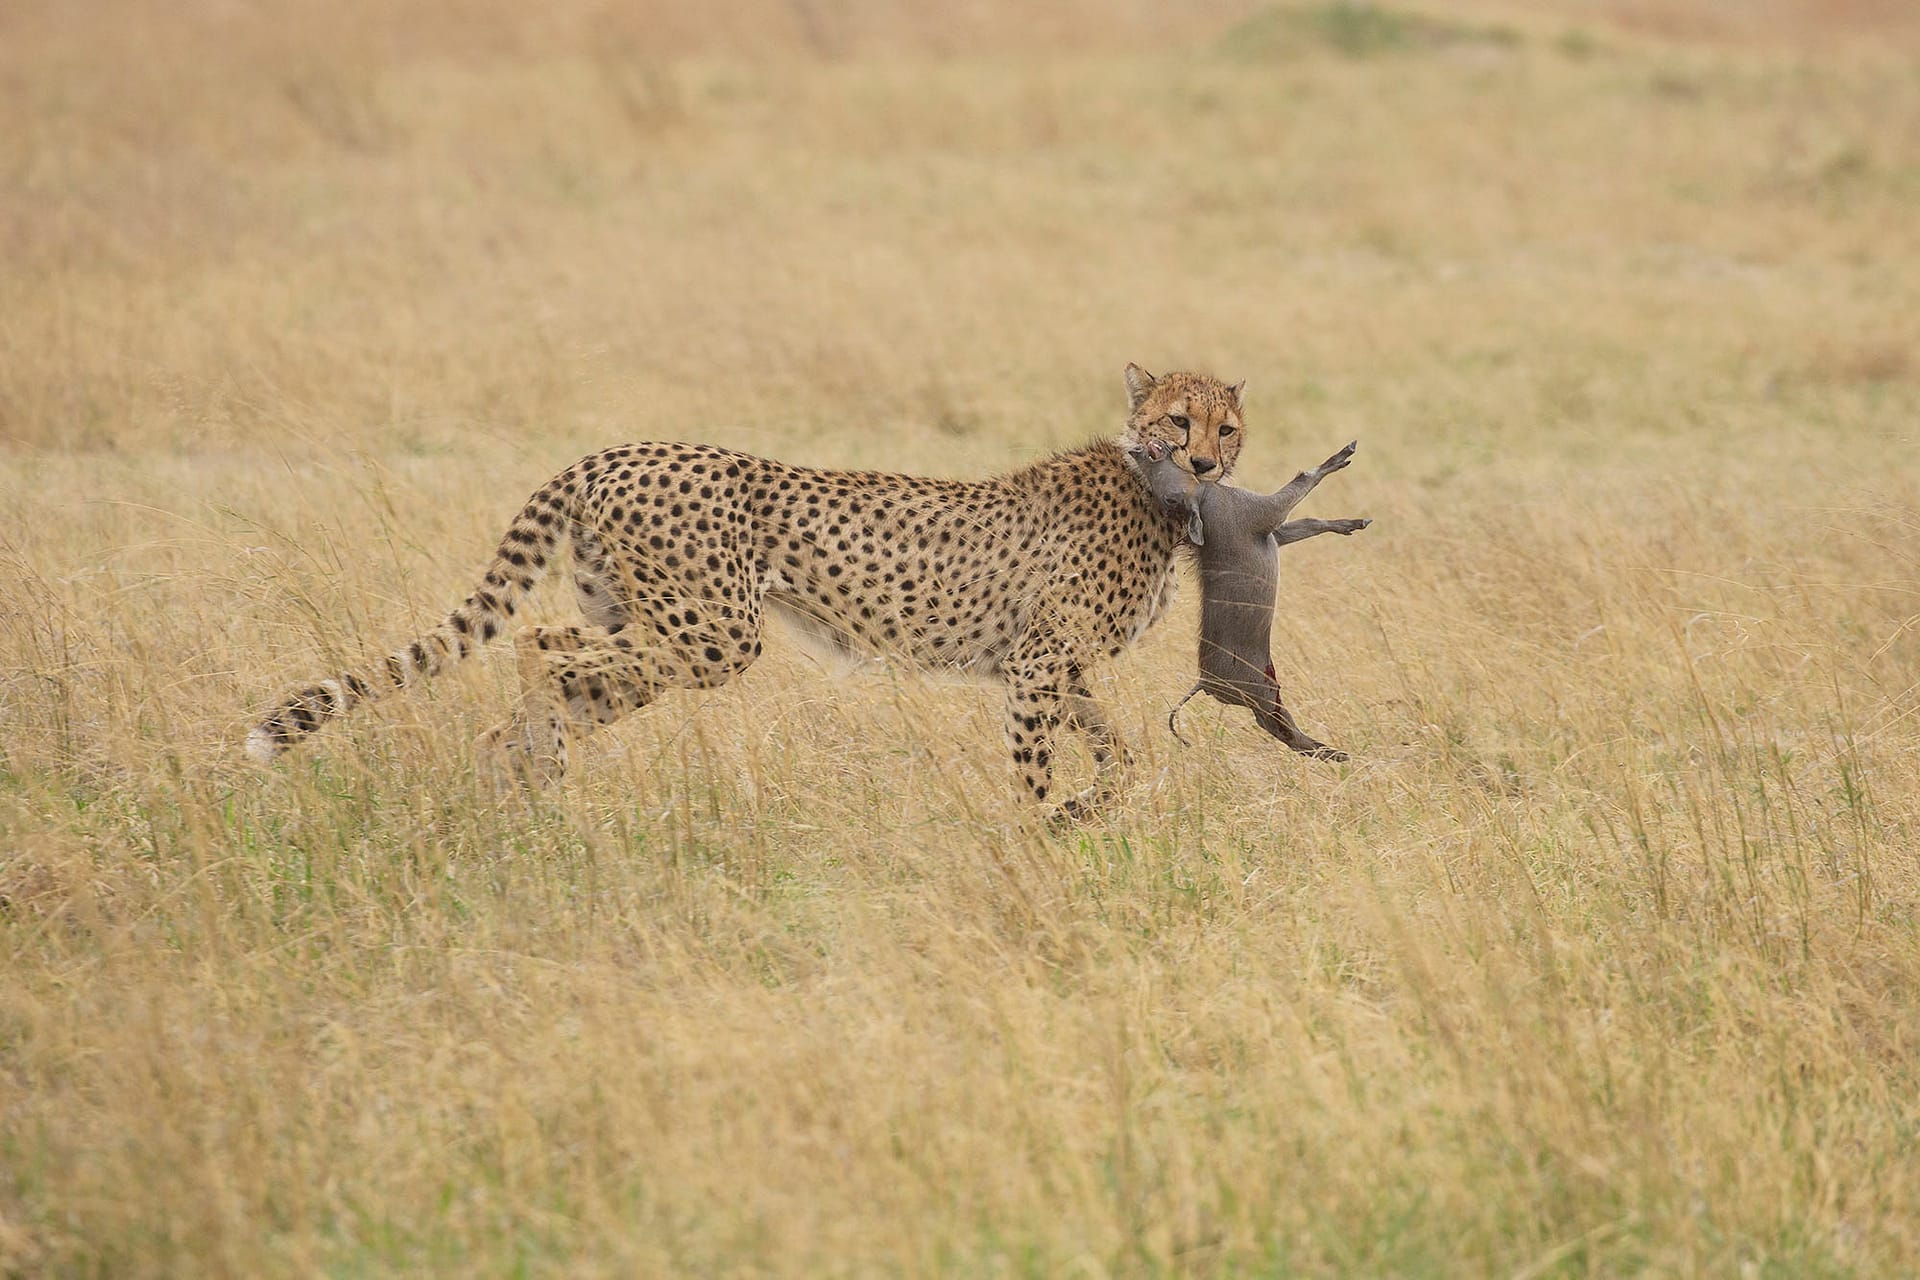 ZIMBABWE Cheetah w warthog kill 2000 BINNS D64A2899 copy